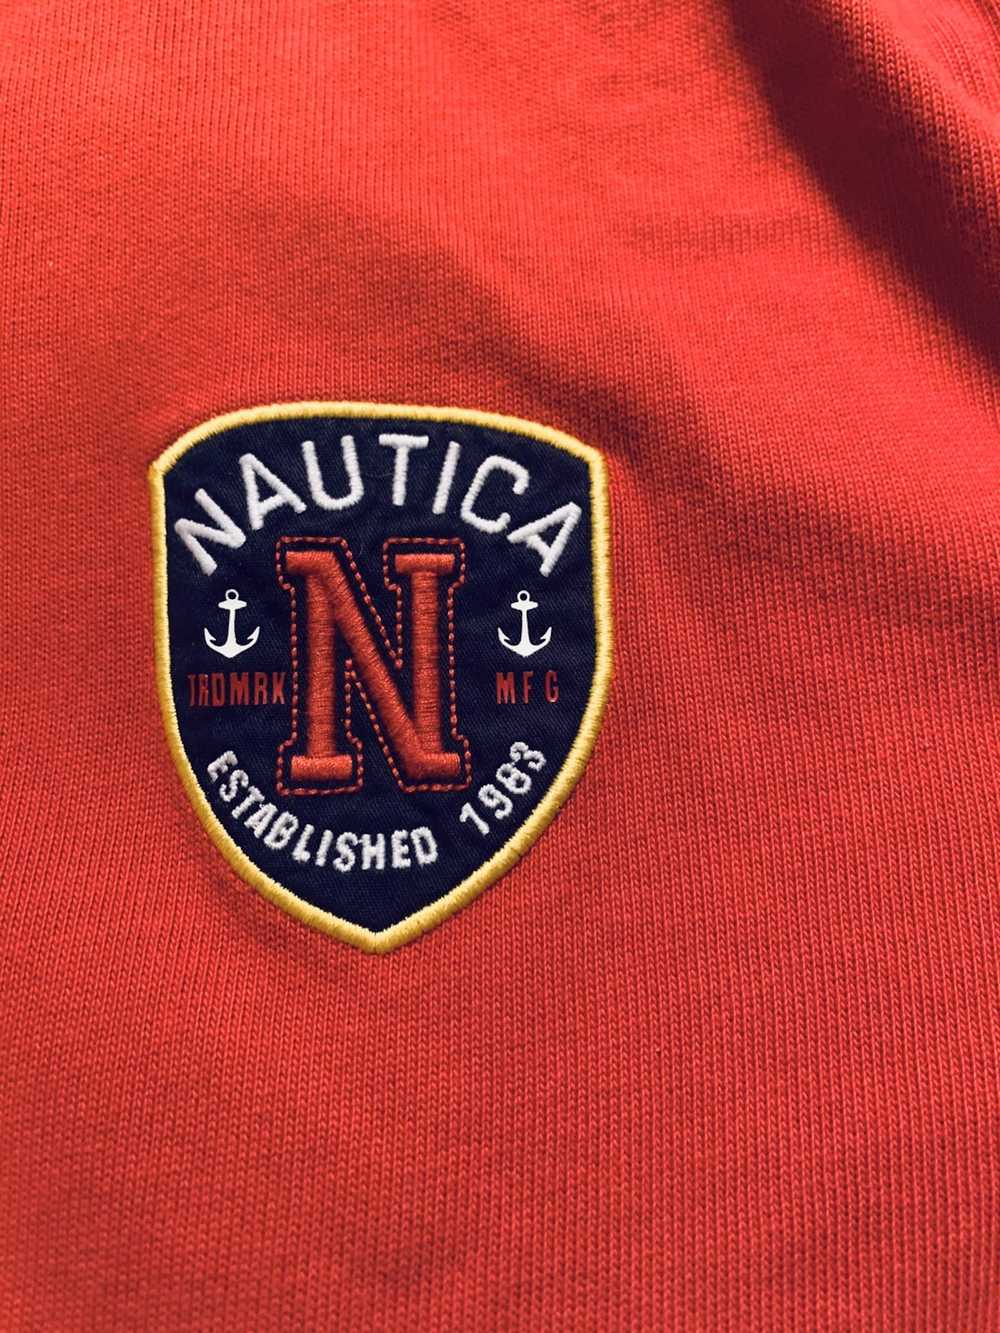 Nautica Nautica Sailing Gear Vintage Sweatshirt - image 6